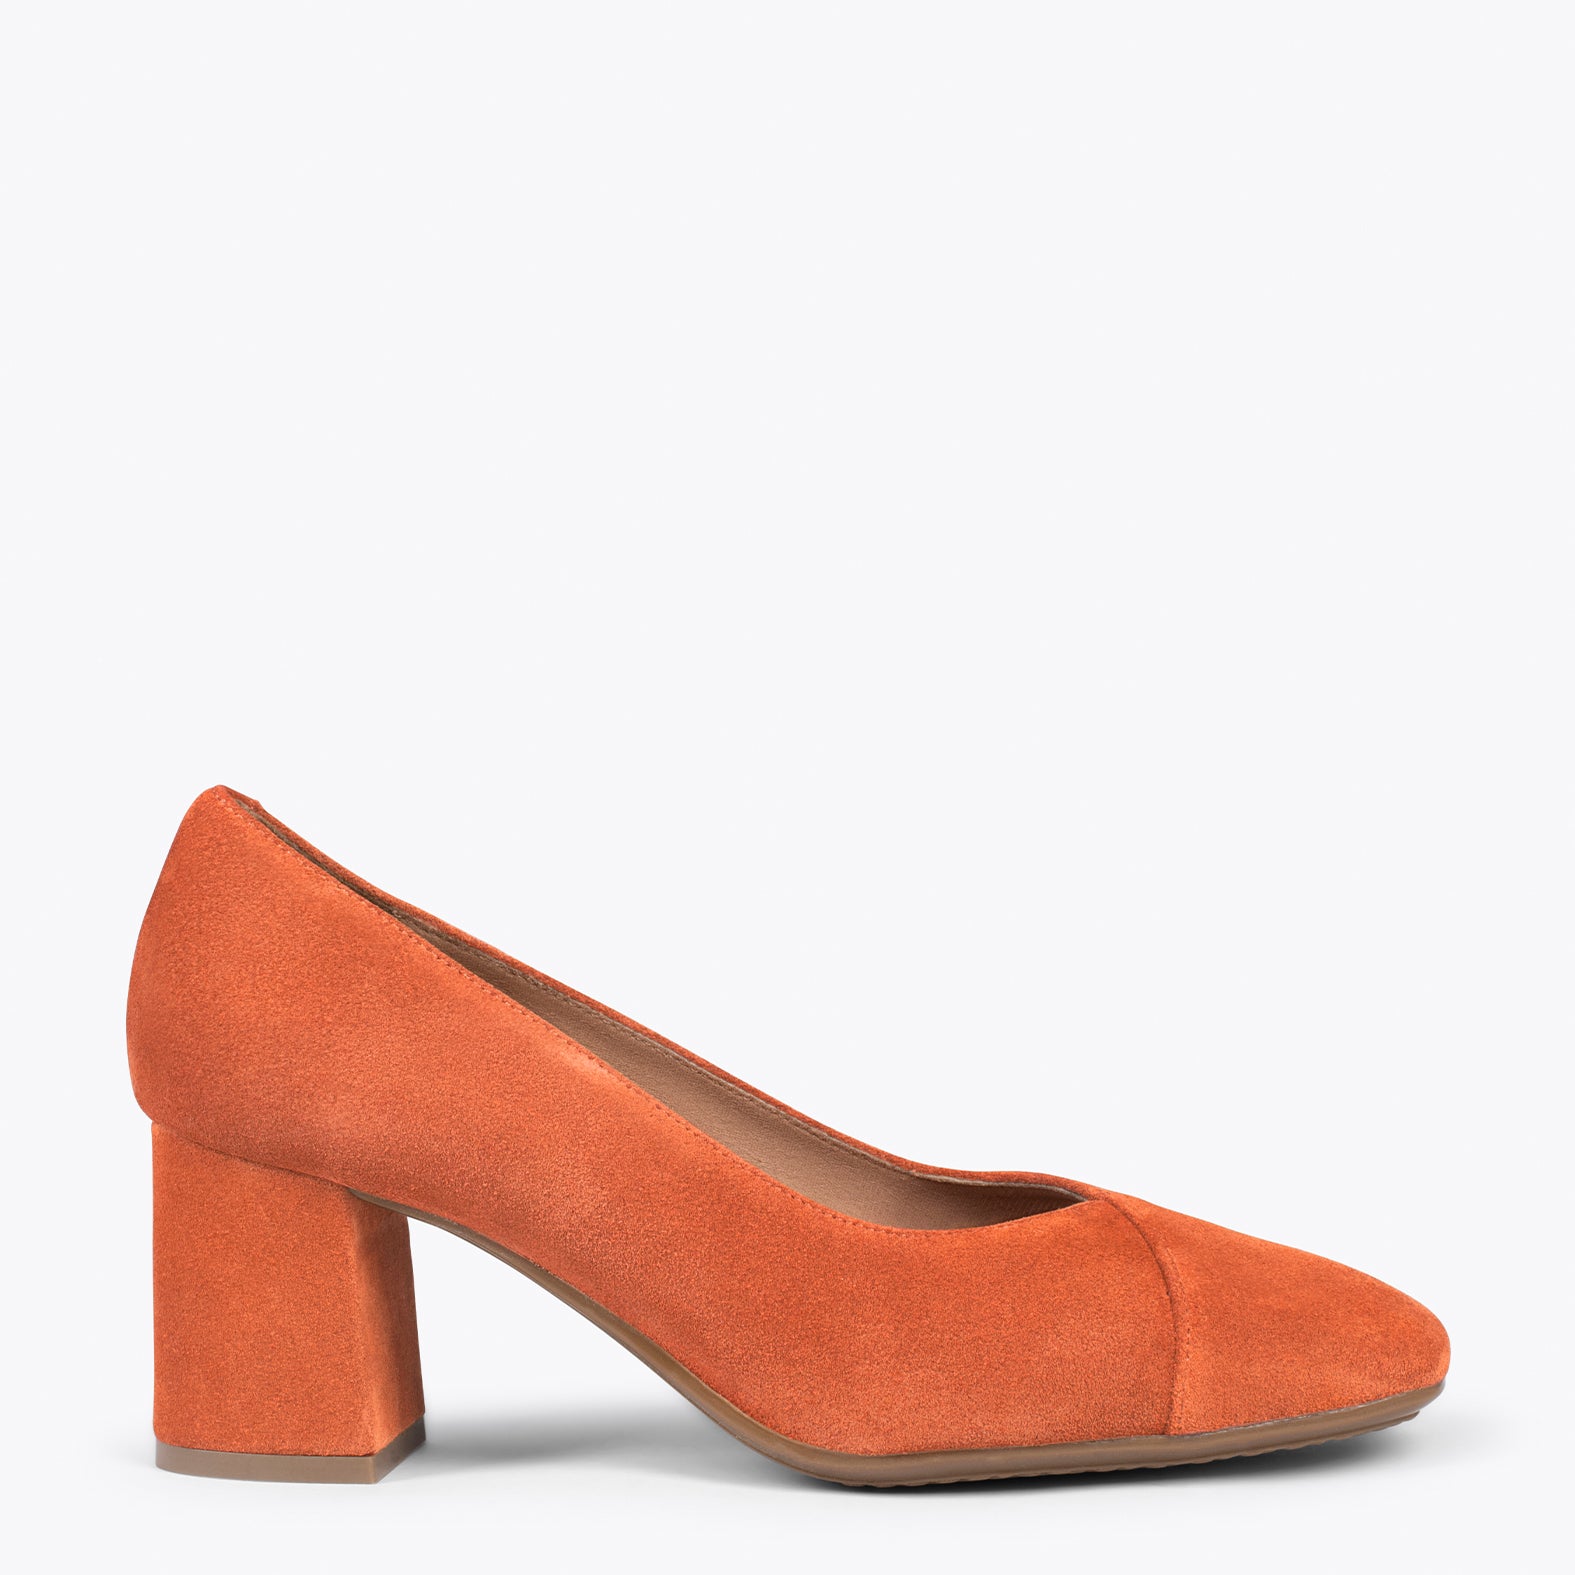 EMMA – ORANGE high heels with square toe